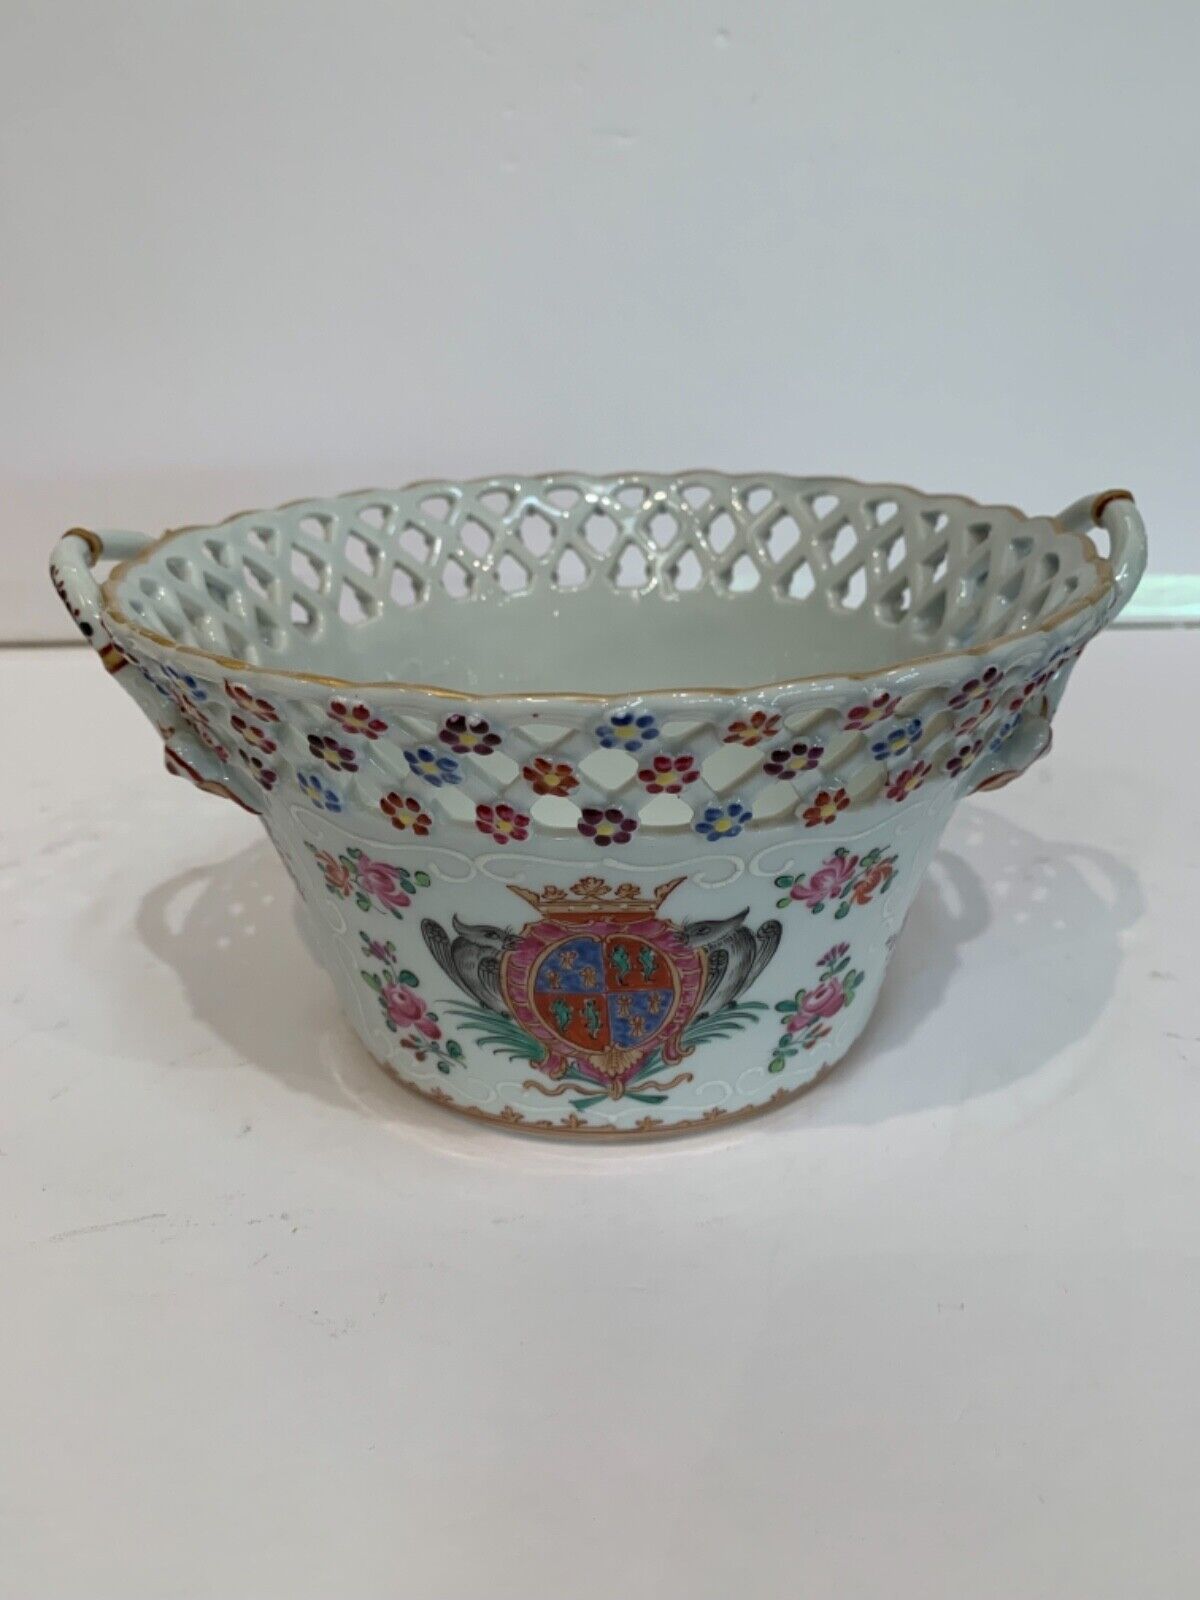 Samson Antique 19thC Chinese export porcelain armorial handled basket 4.5x11”